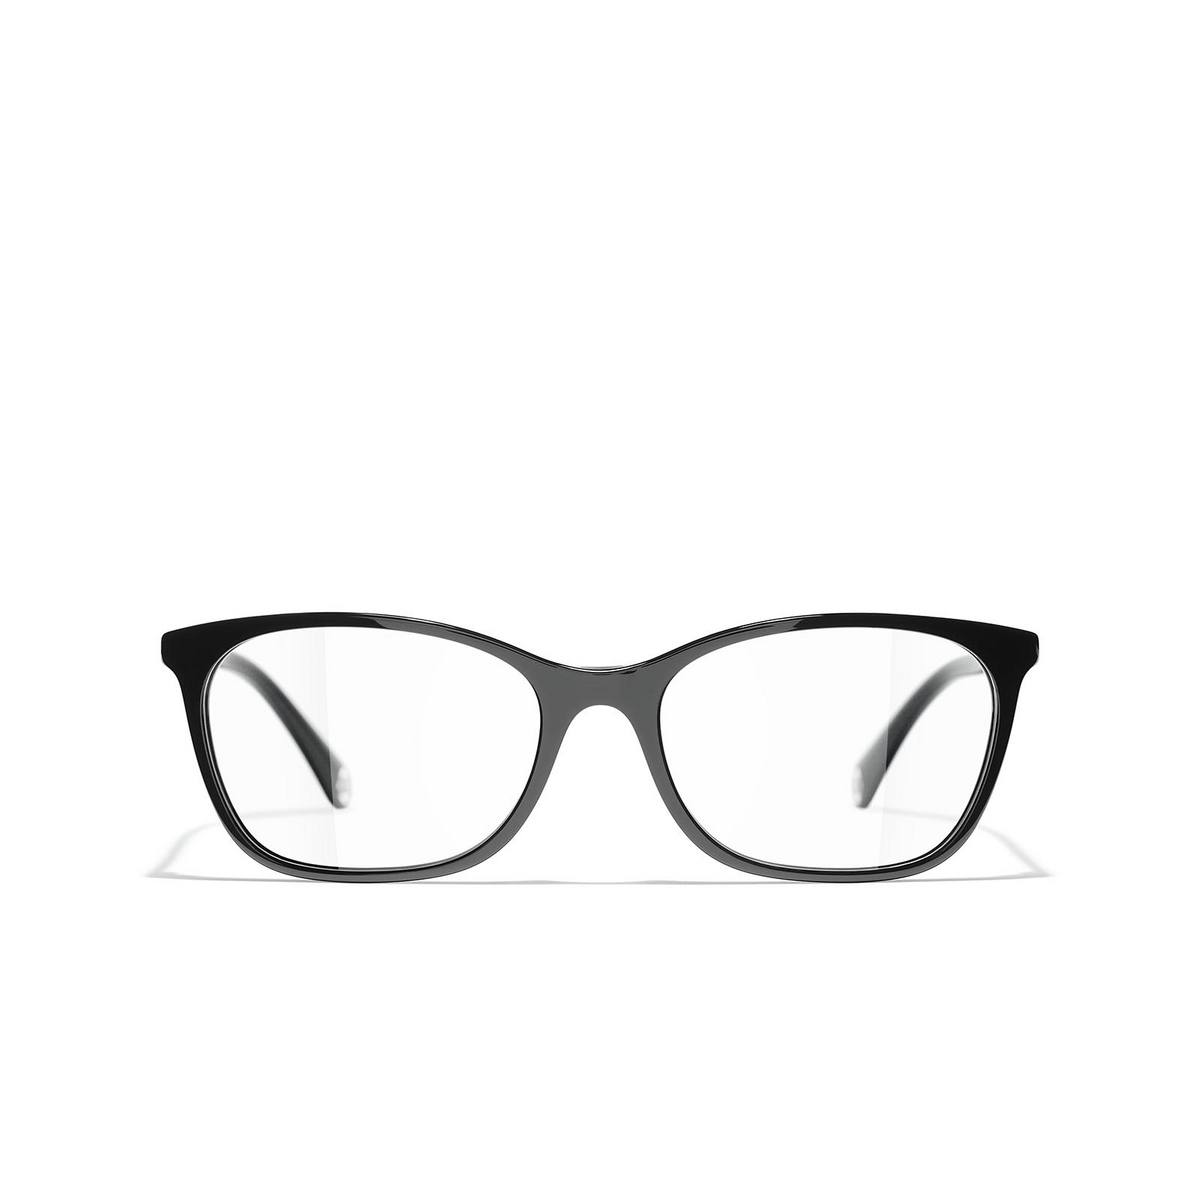 CHANEL rectangle Eyeglasses C501 Black - front view